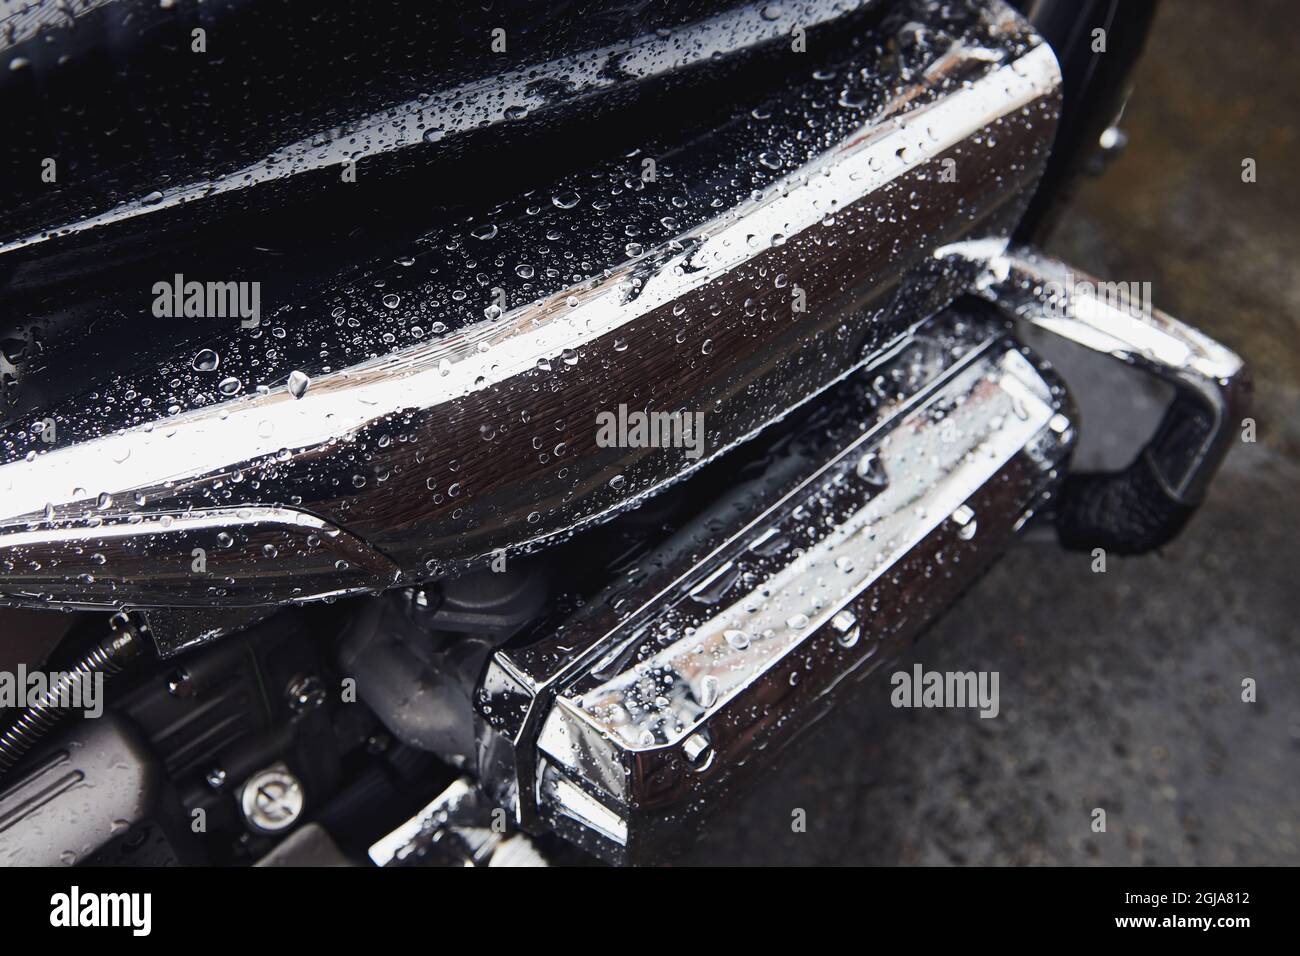 Black motorcycle after rain. Water drops on bike. Chrome engine closeup. Stock Photo